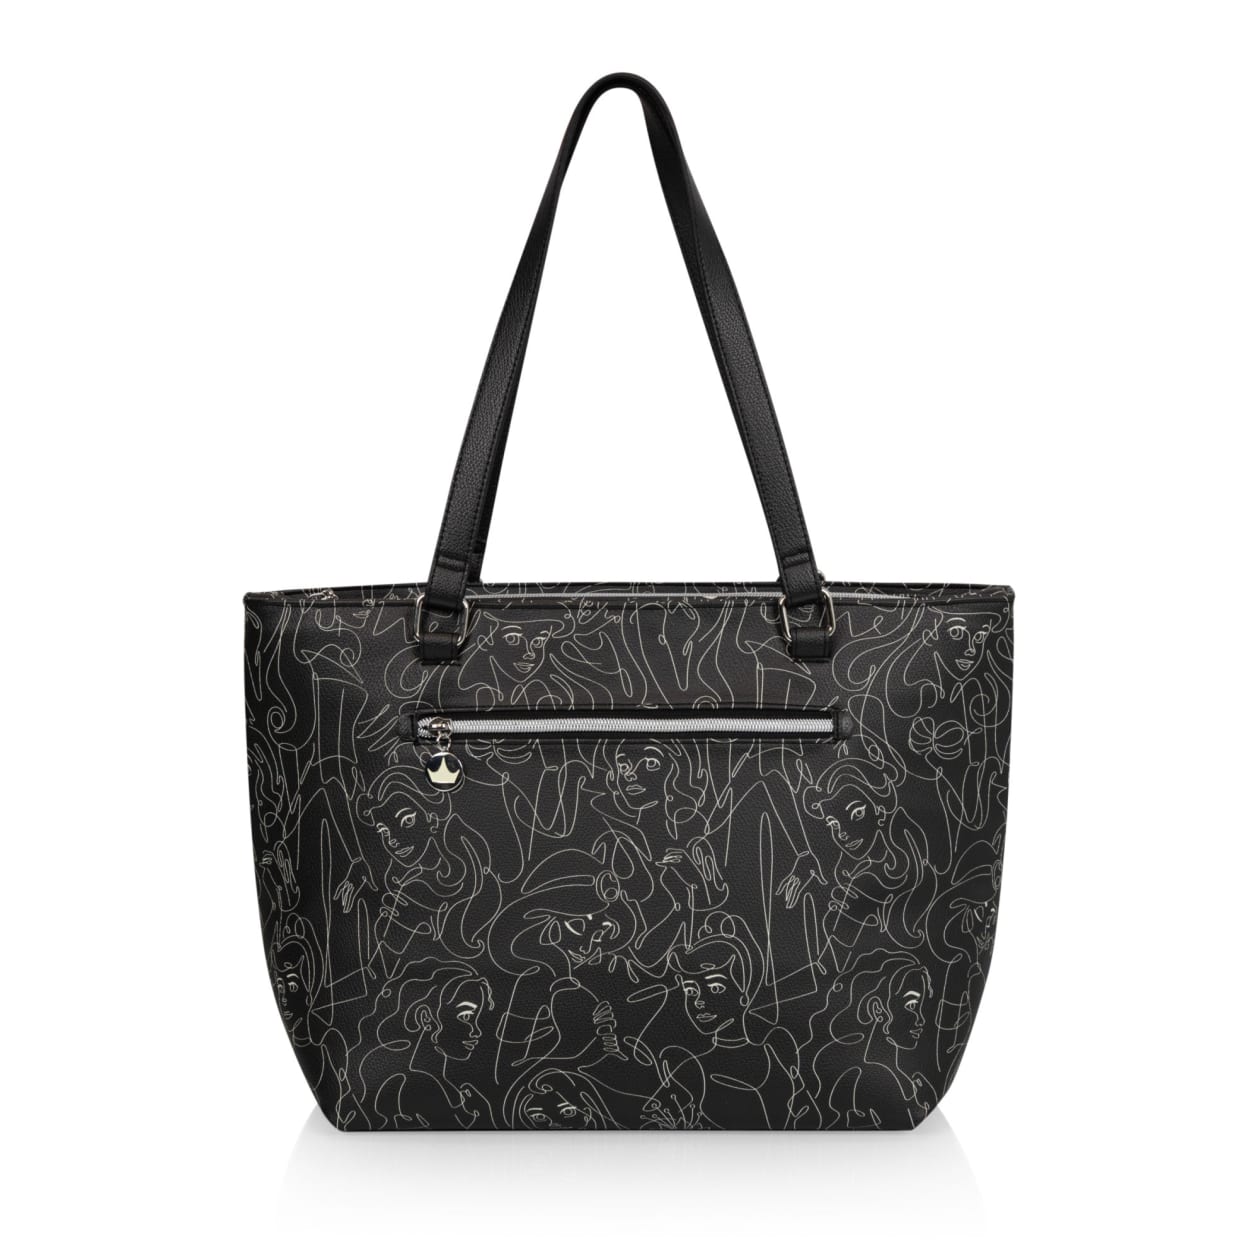 Princesses - Uptown Cooler Tote Bag - Color: Black